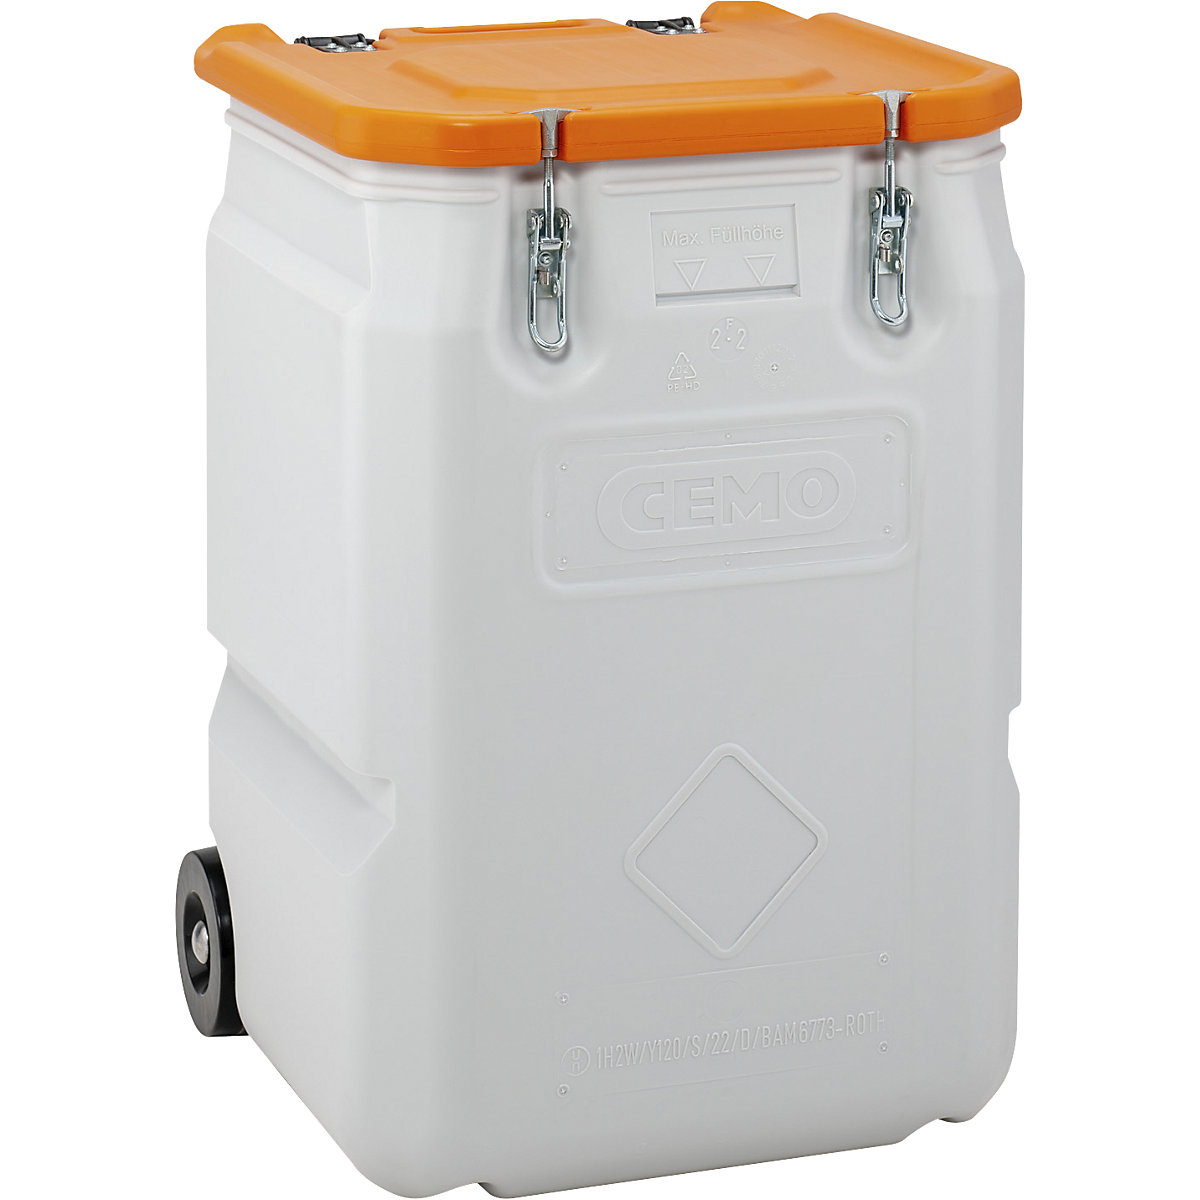 Mobil-Box hazardous materials collection container - CEMO